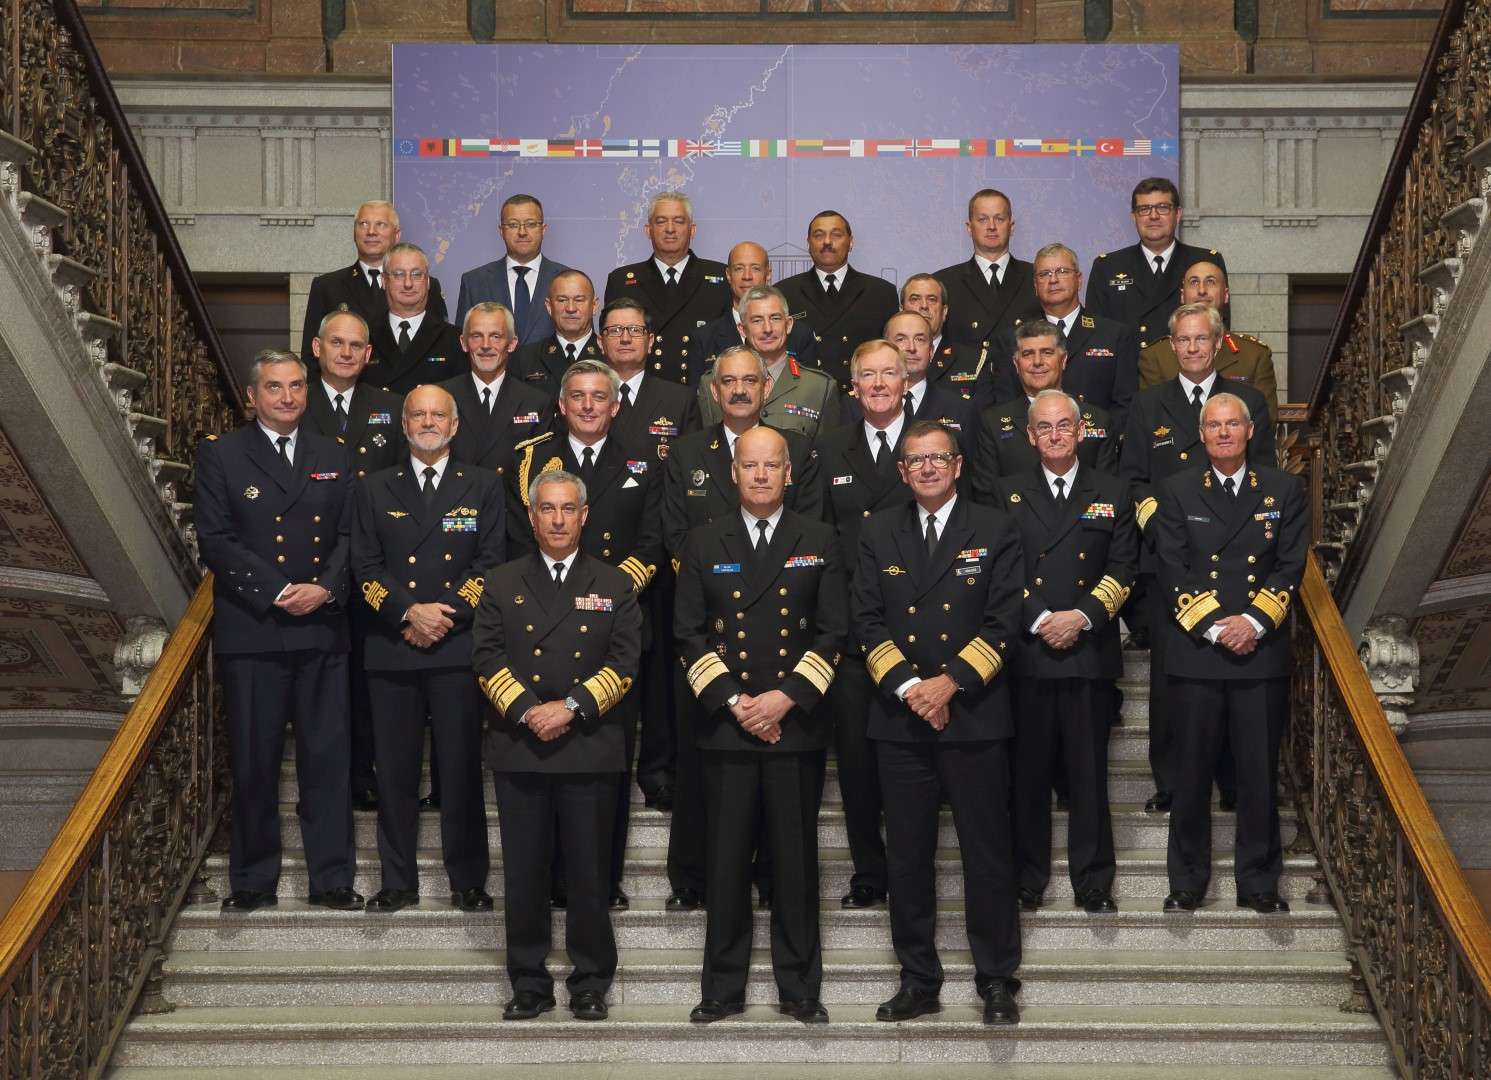 O Αρχηγός ΓΕΝ στη Σύνοδο Αρχηγών των Ευρωπαϊκών Ναυτικών